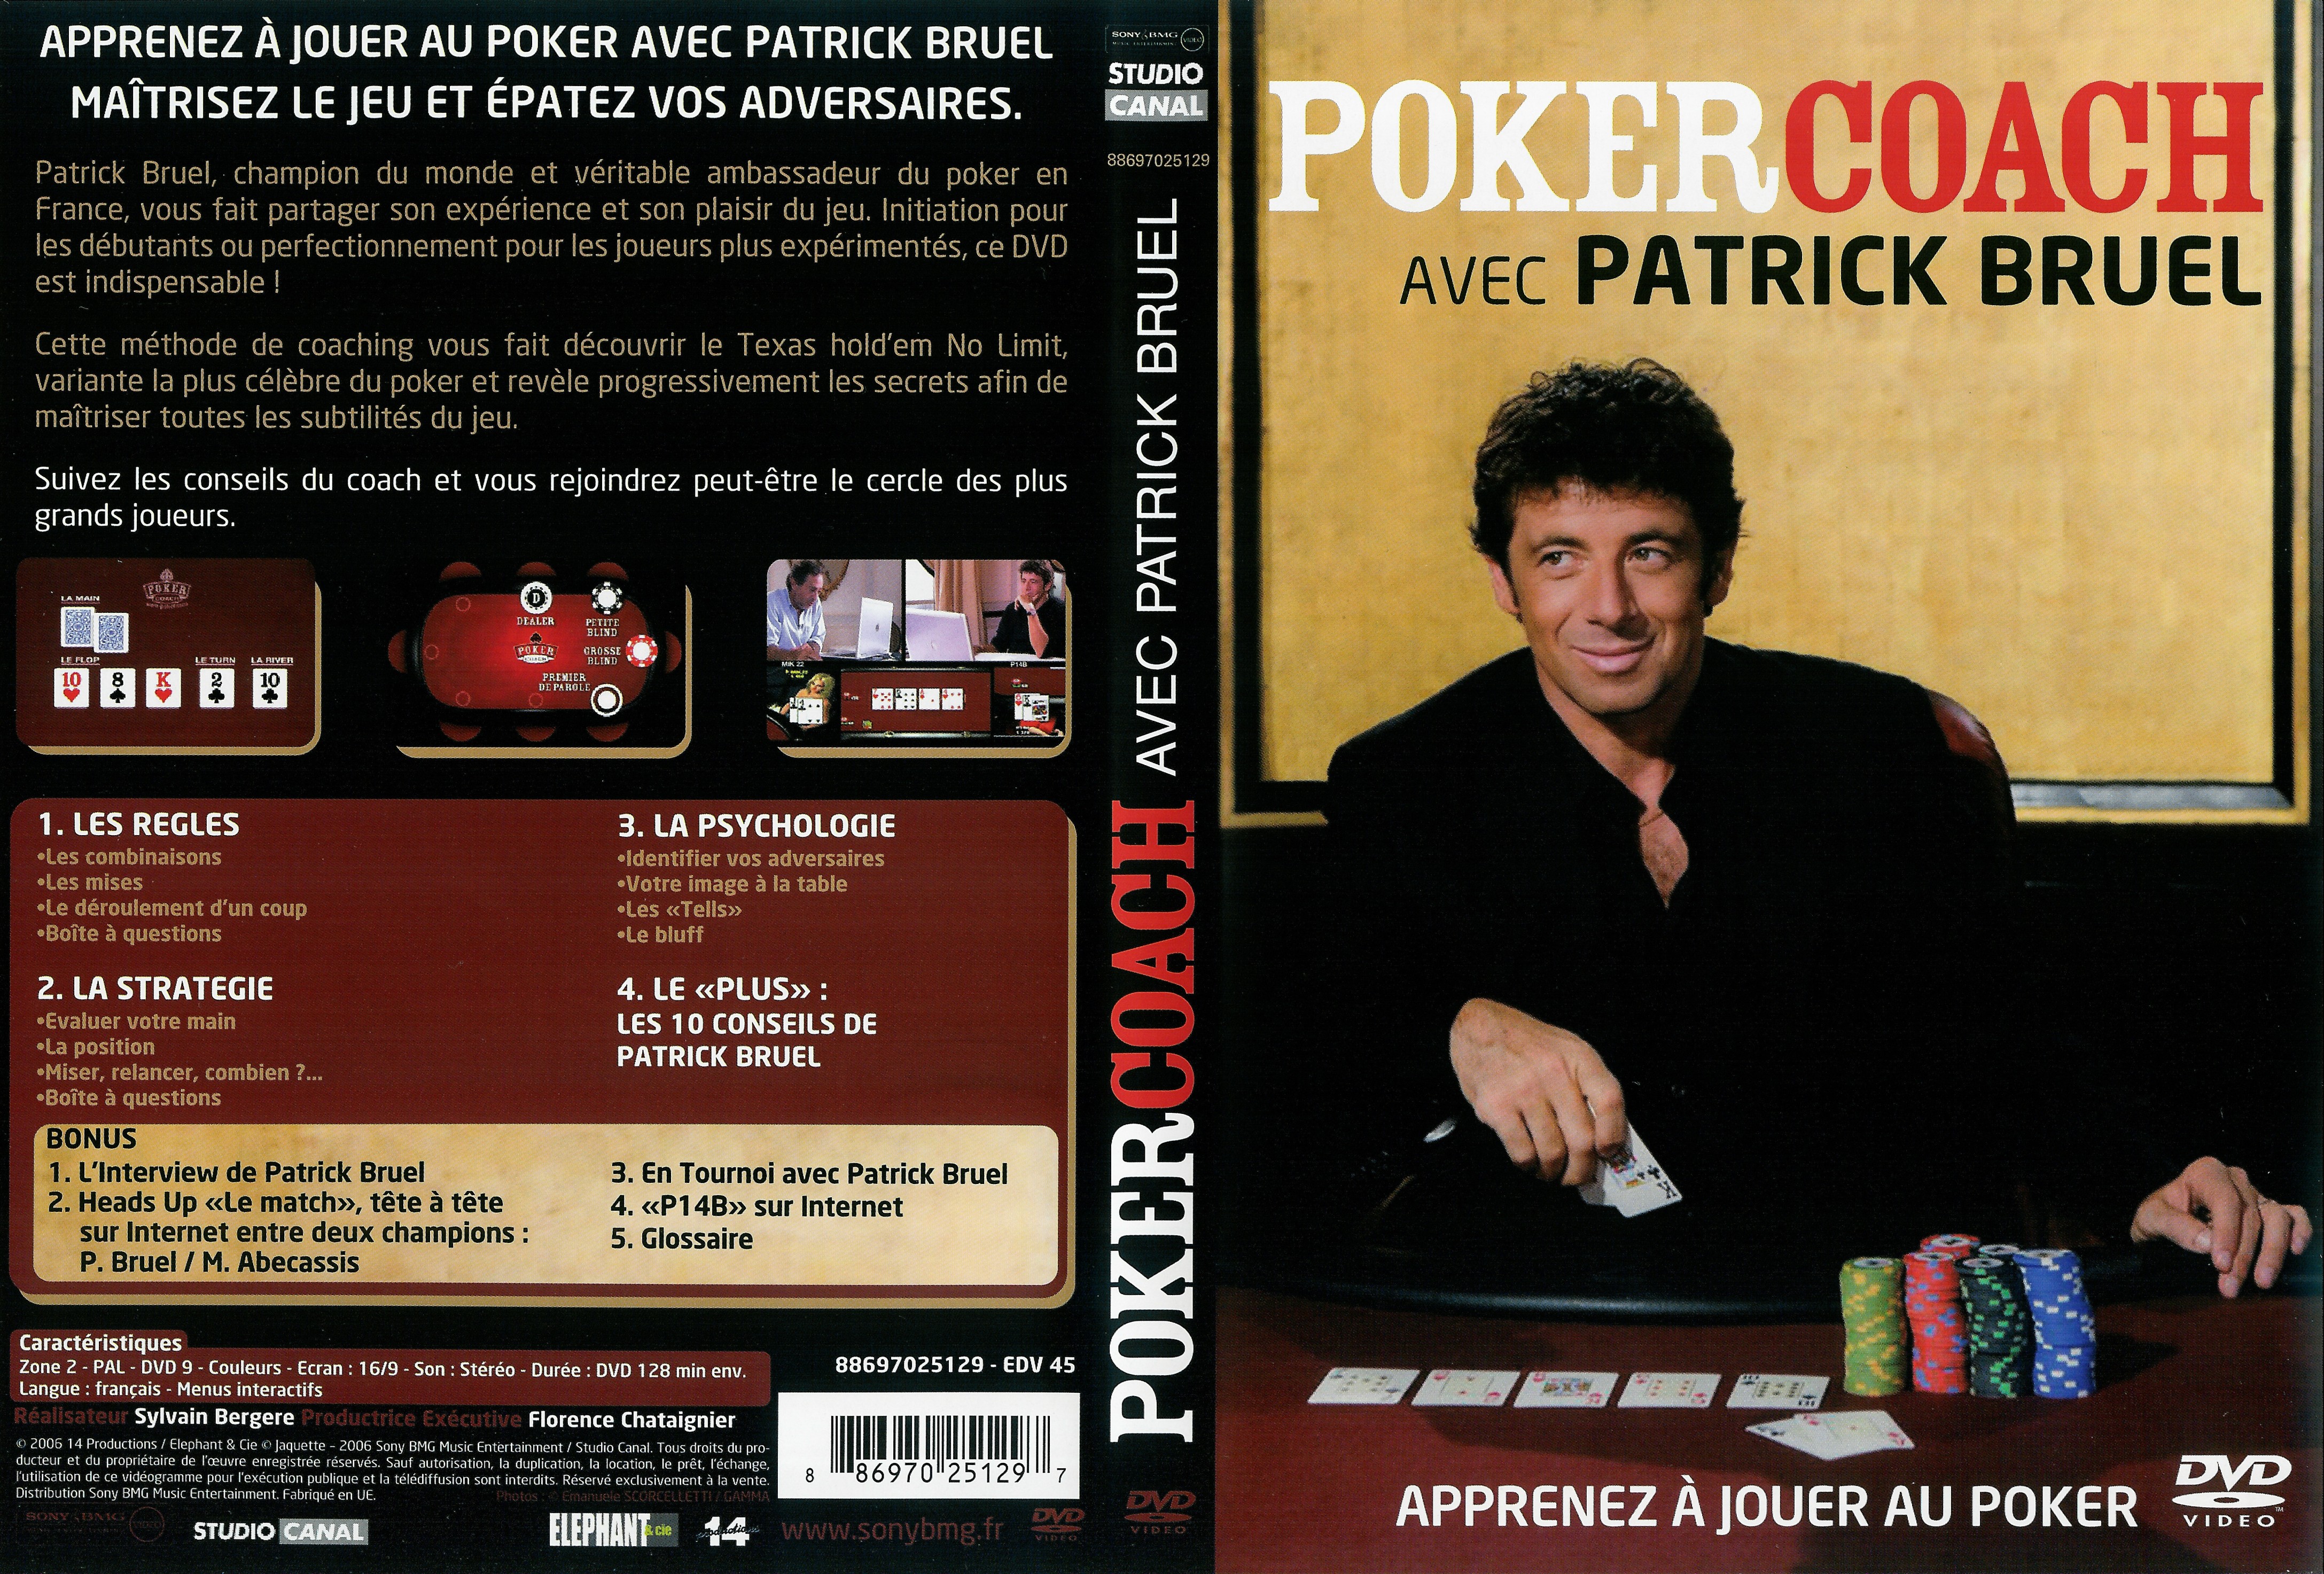 Jaquette DVD Poker coach